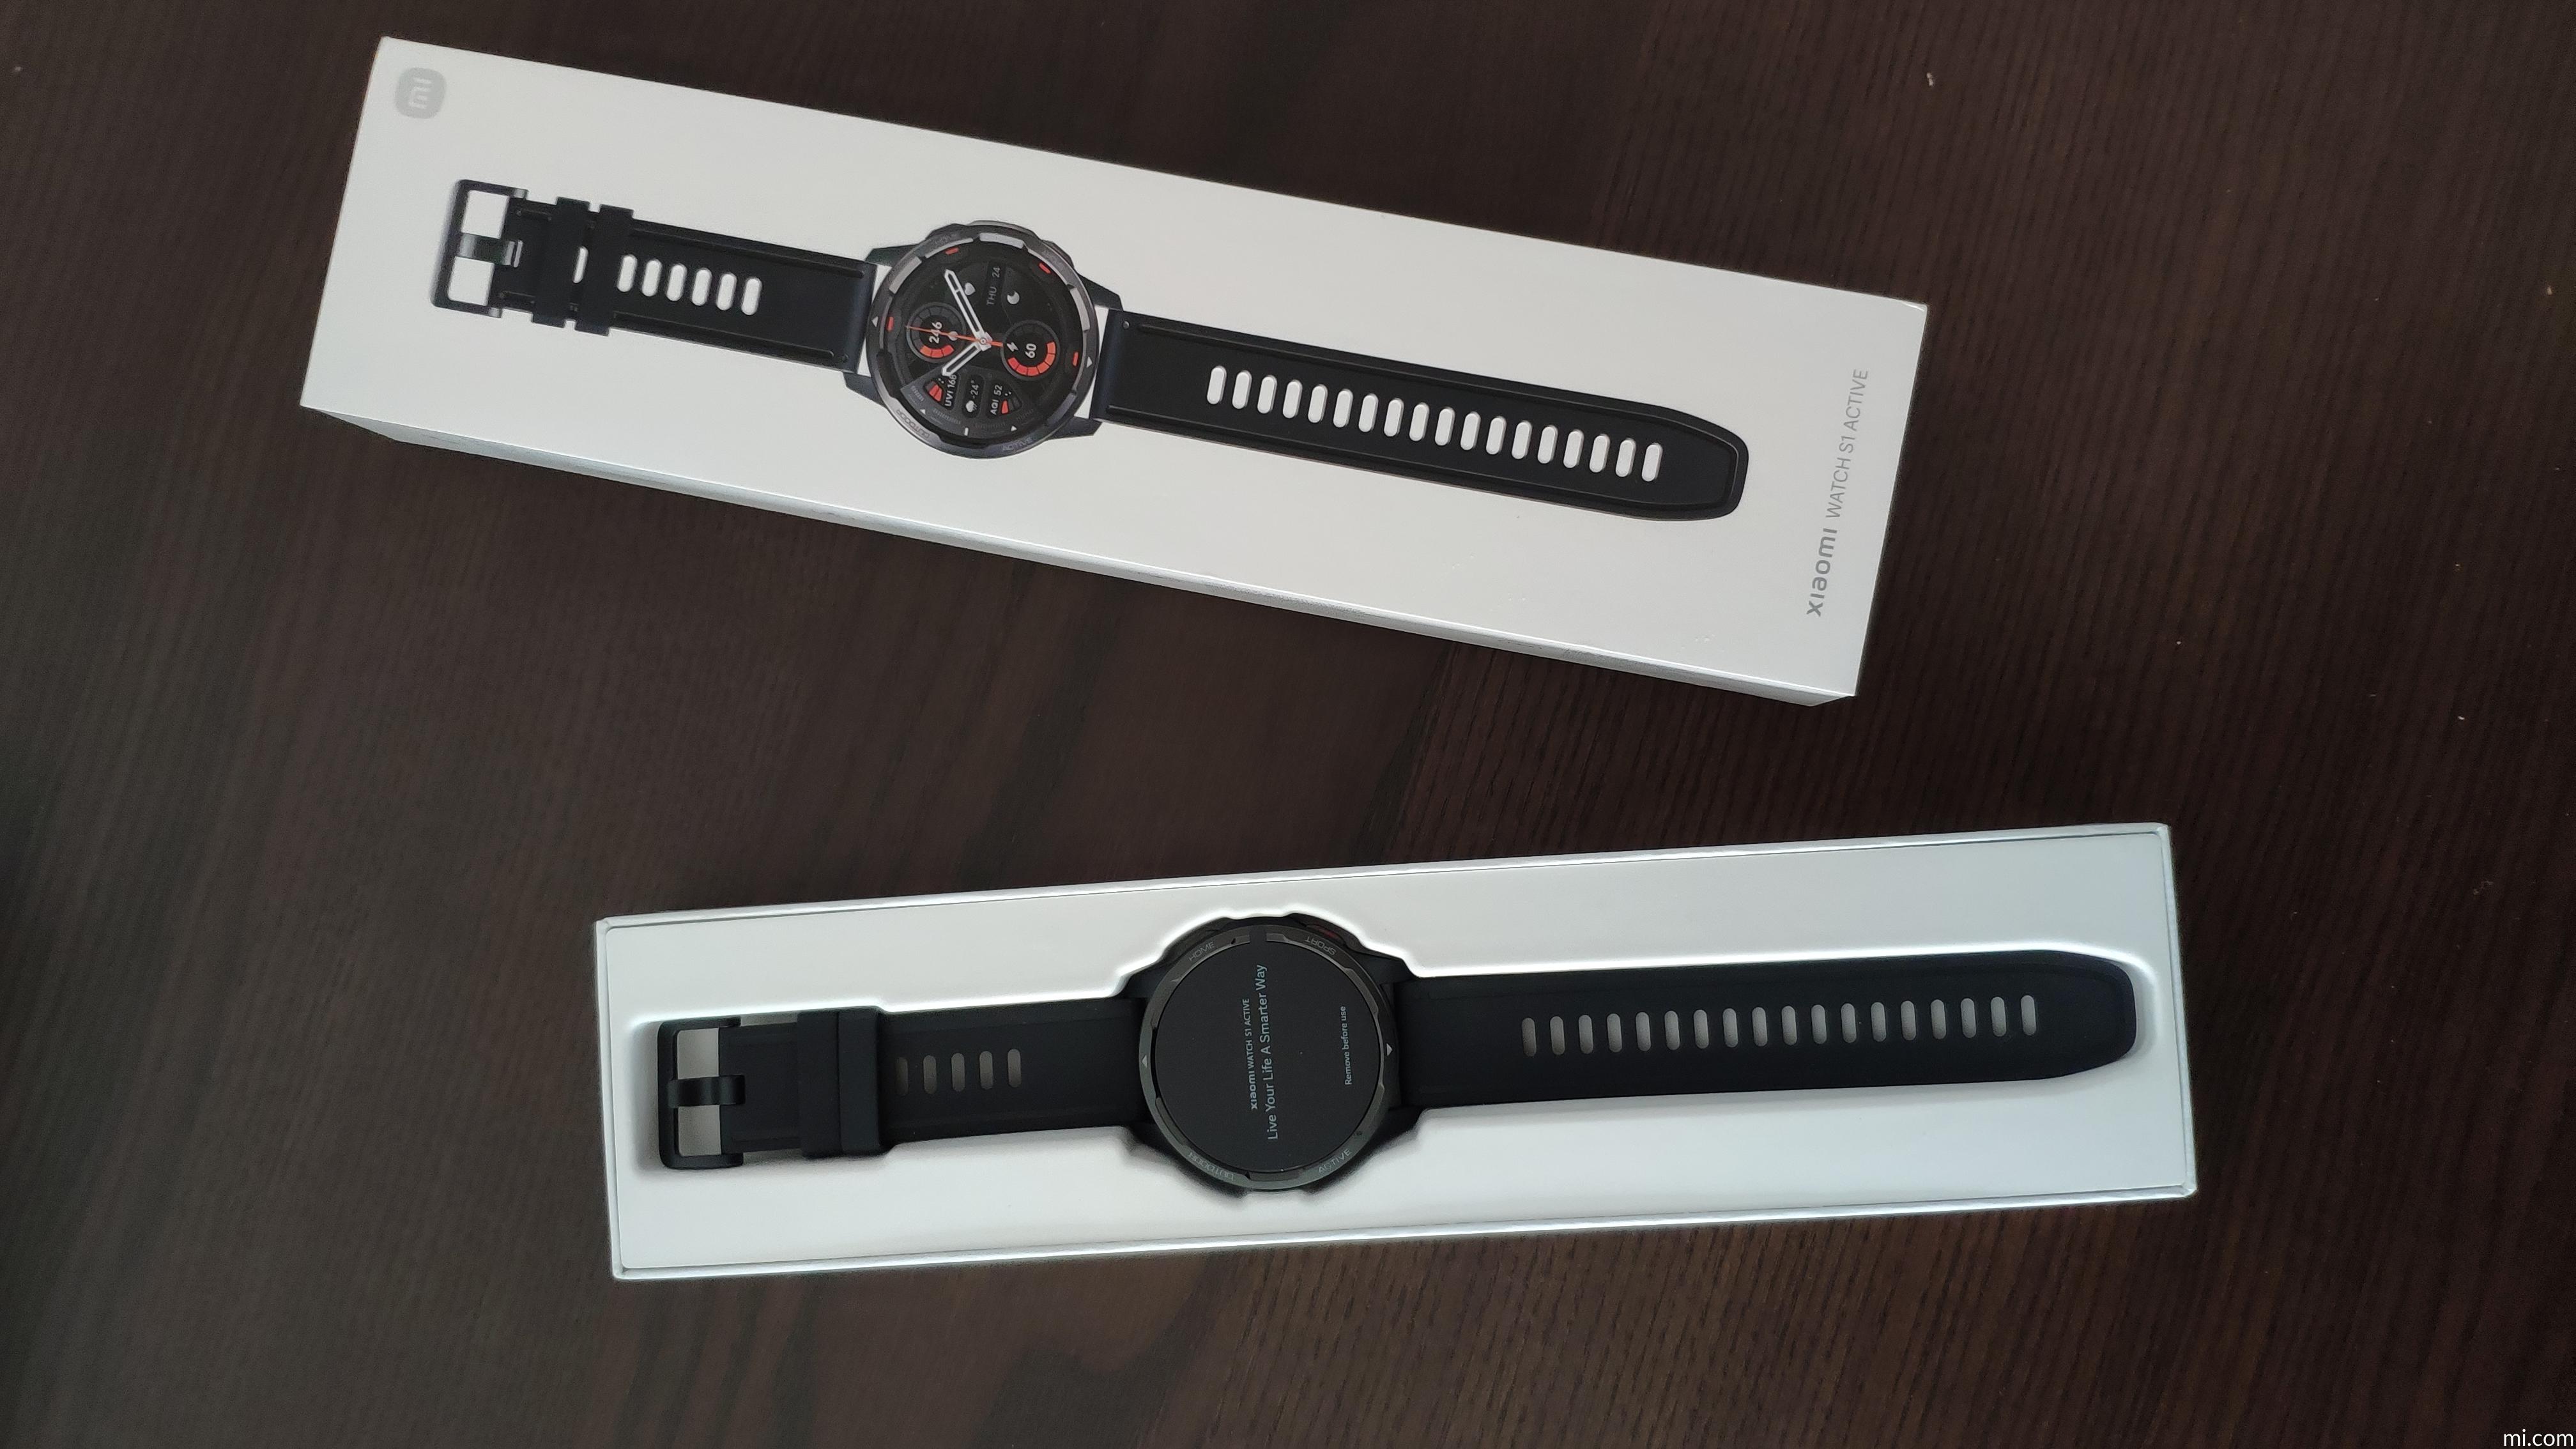 Xiaomi Reloj Inteligente MI Watch S1-BL-1 GPS Negro 